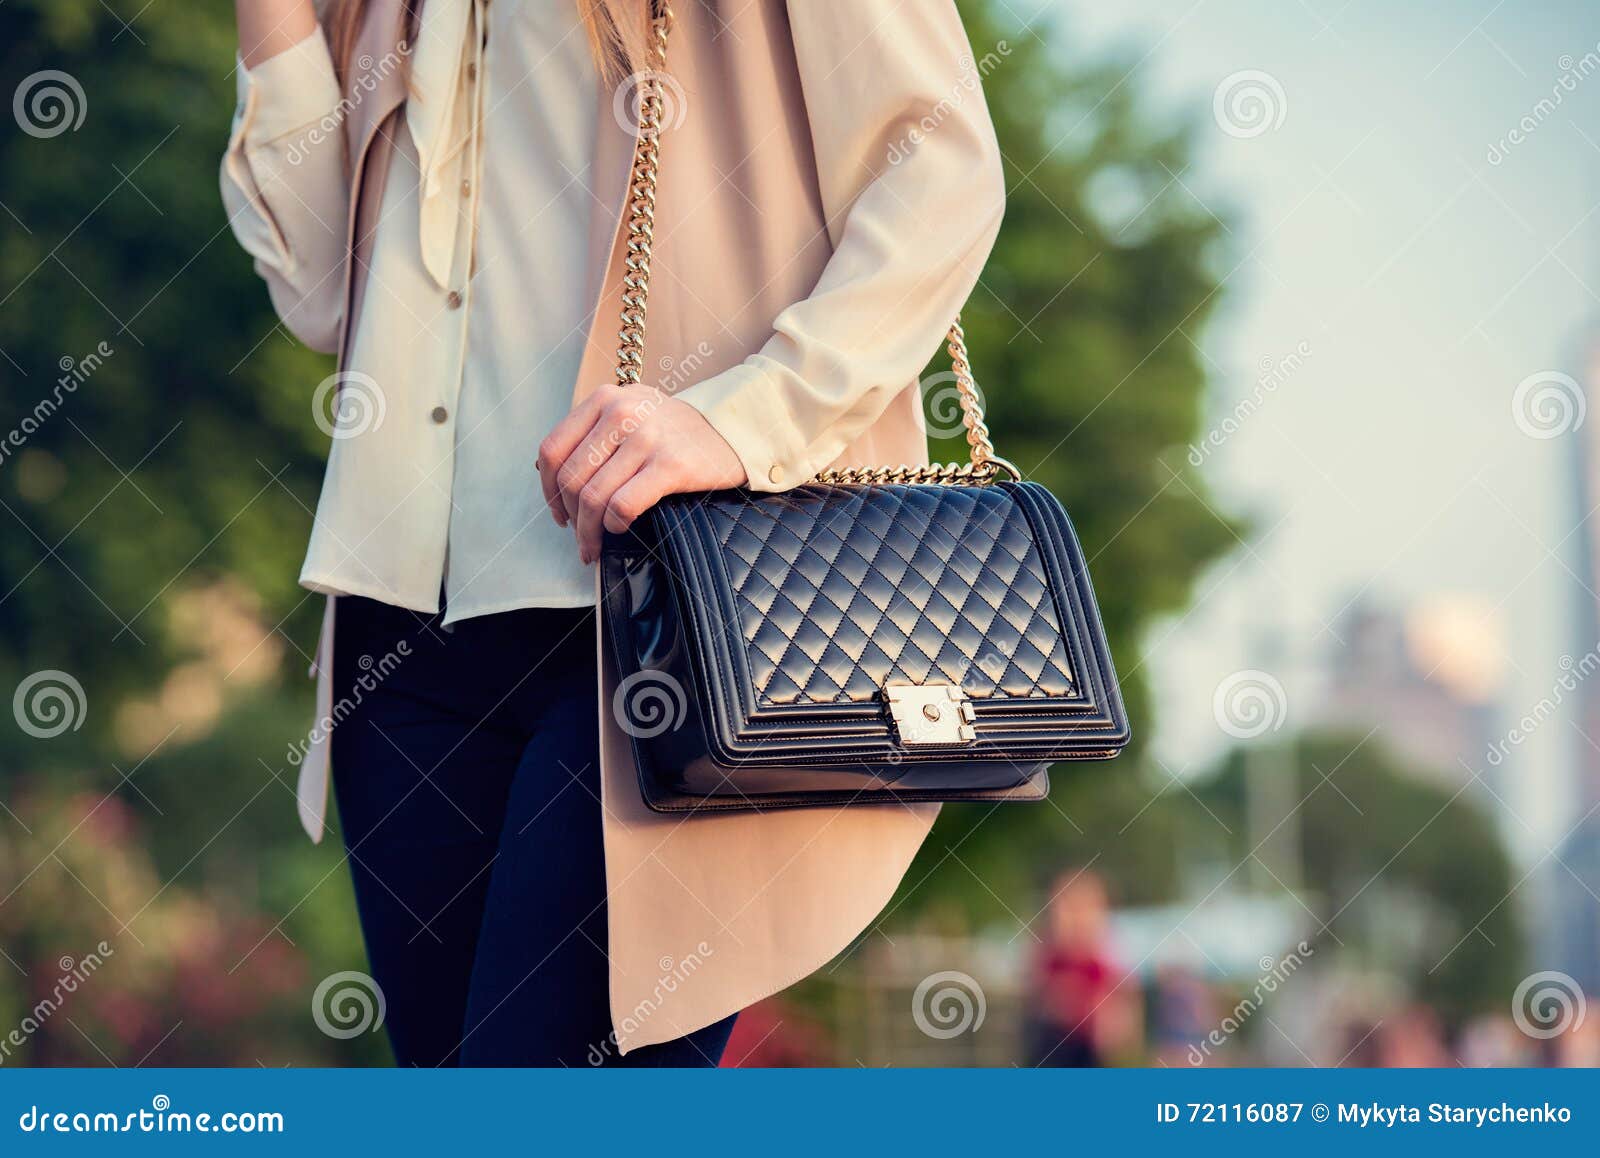 woman carrying elegant purses bag at city park